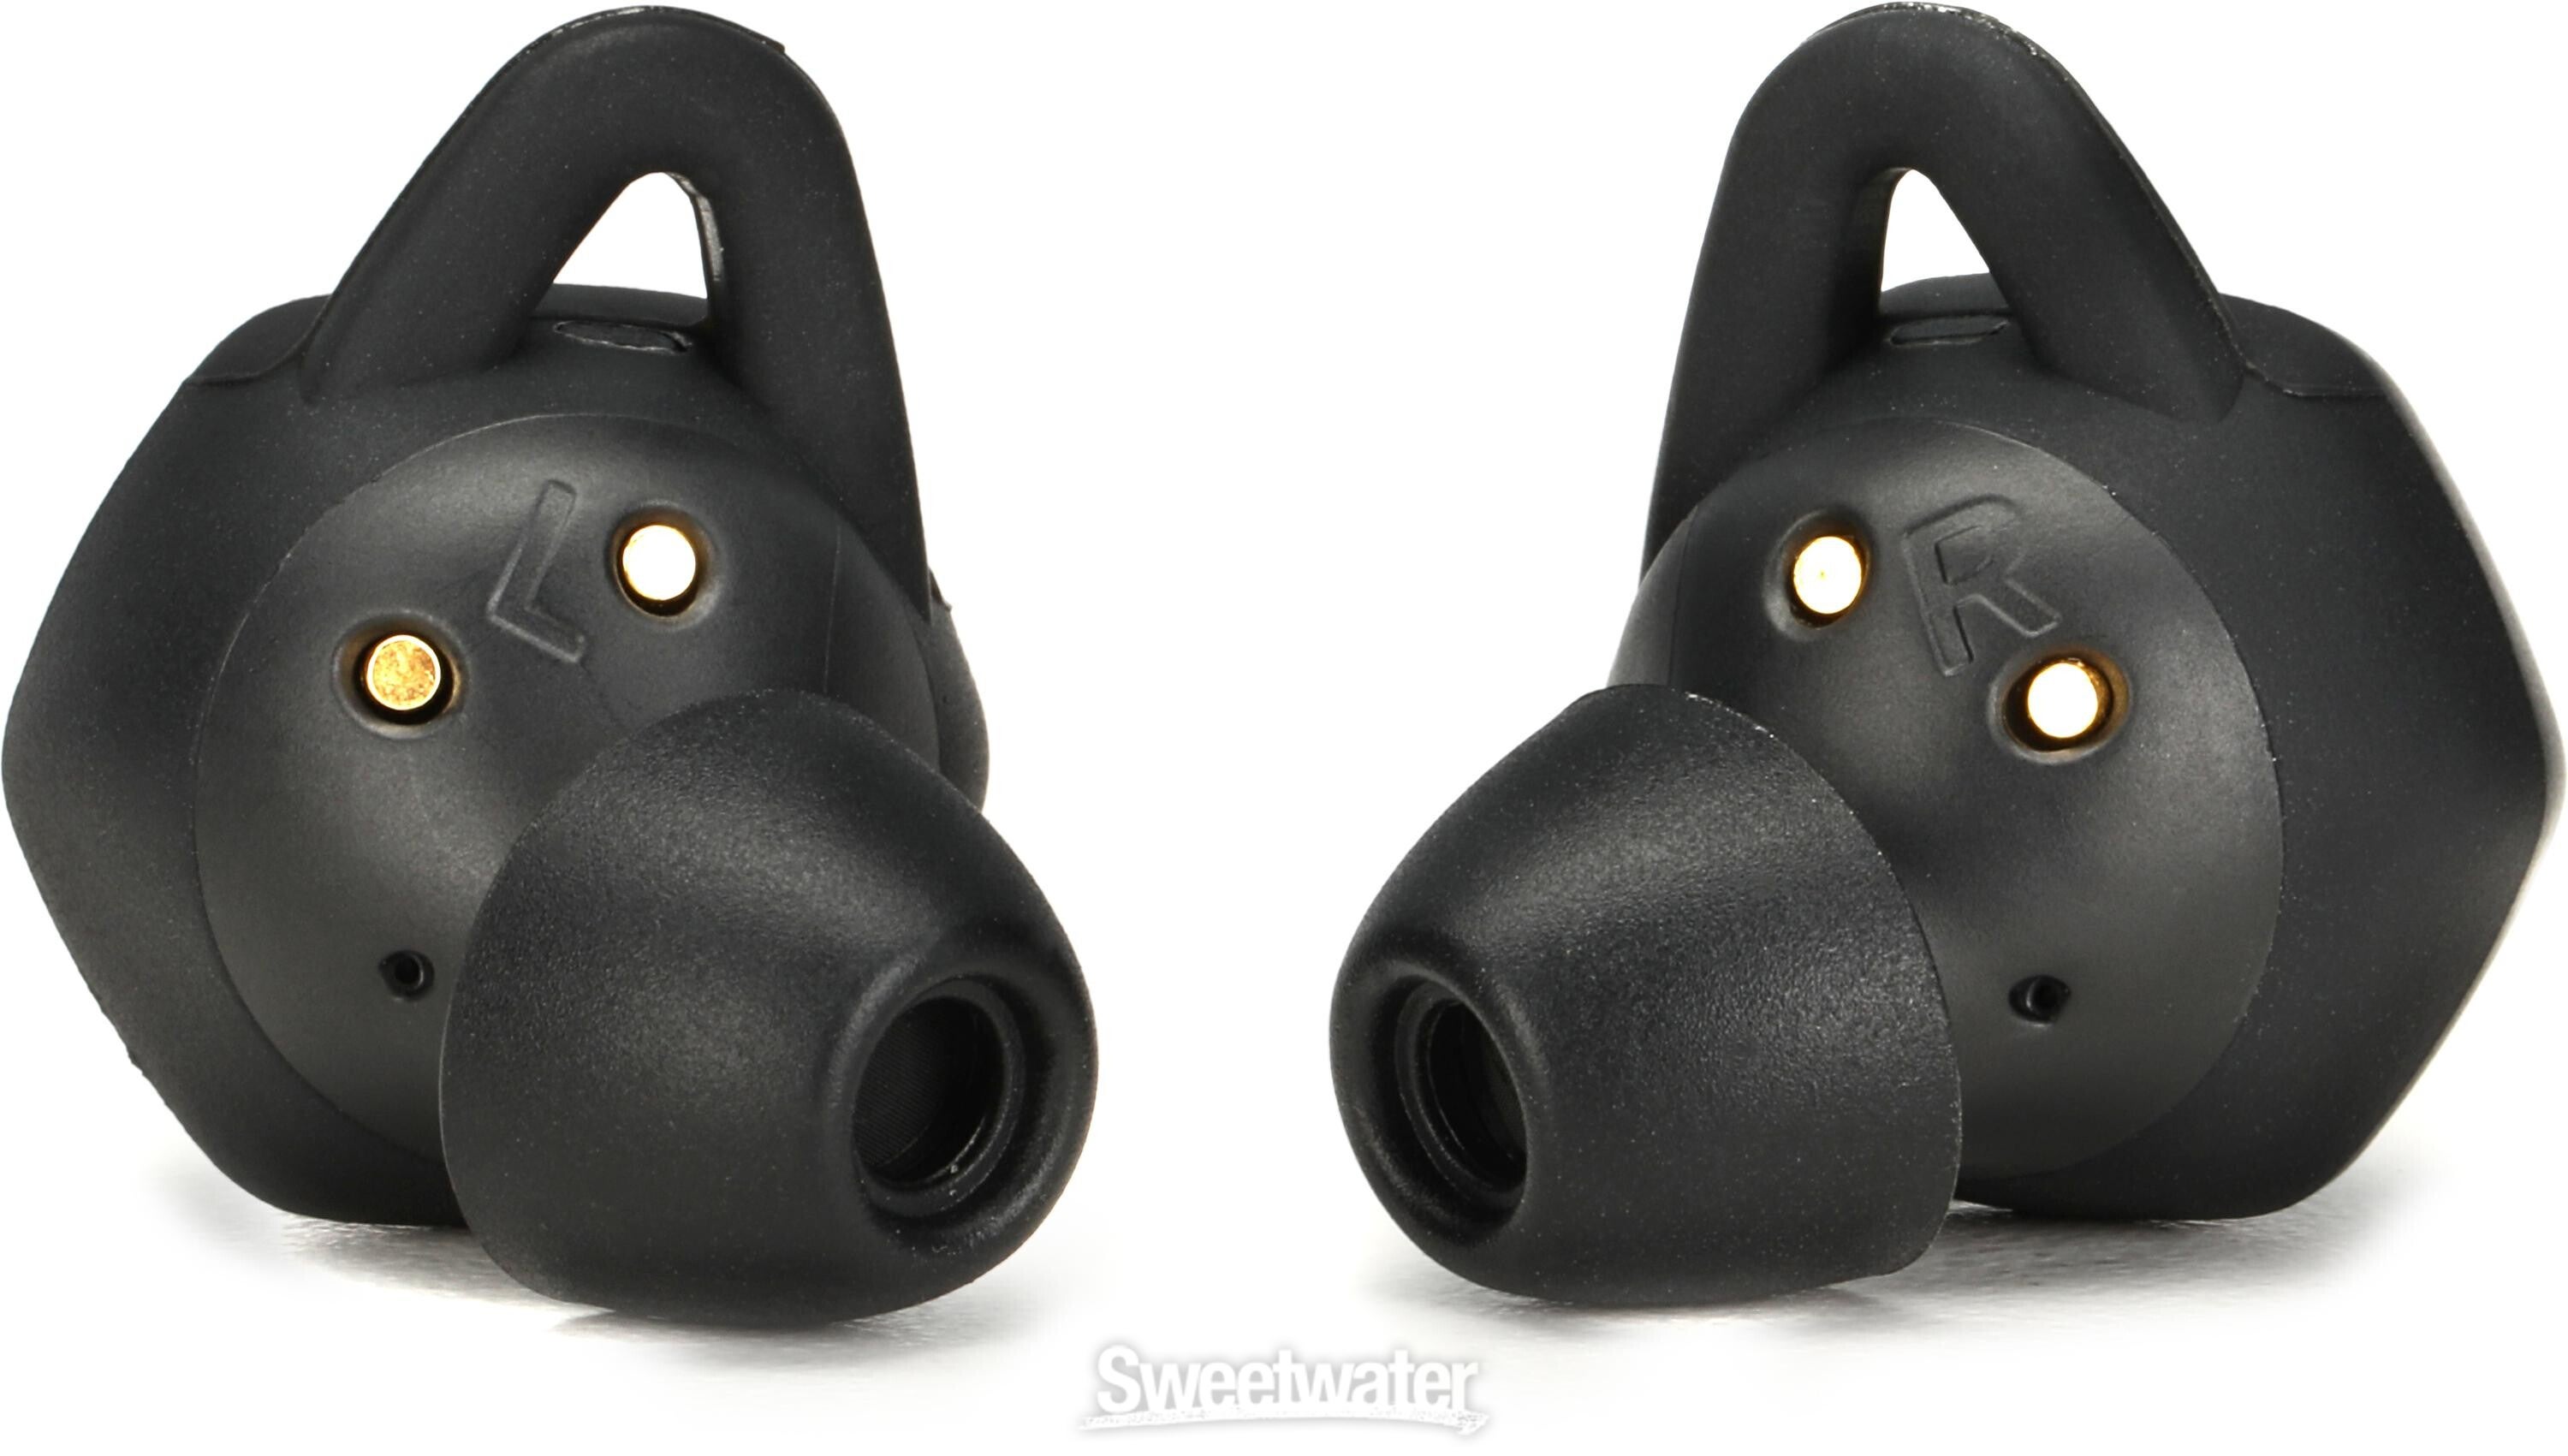 V-Moda Hexamove Pro Wireless Earbuds - Black